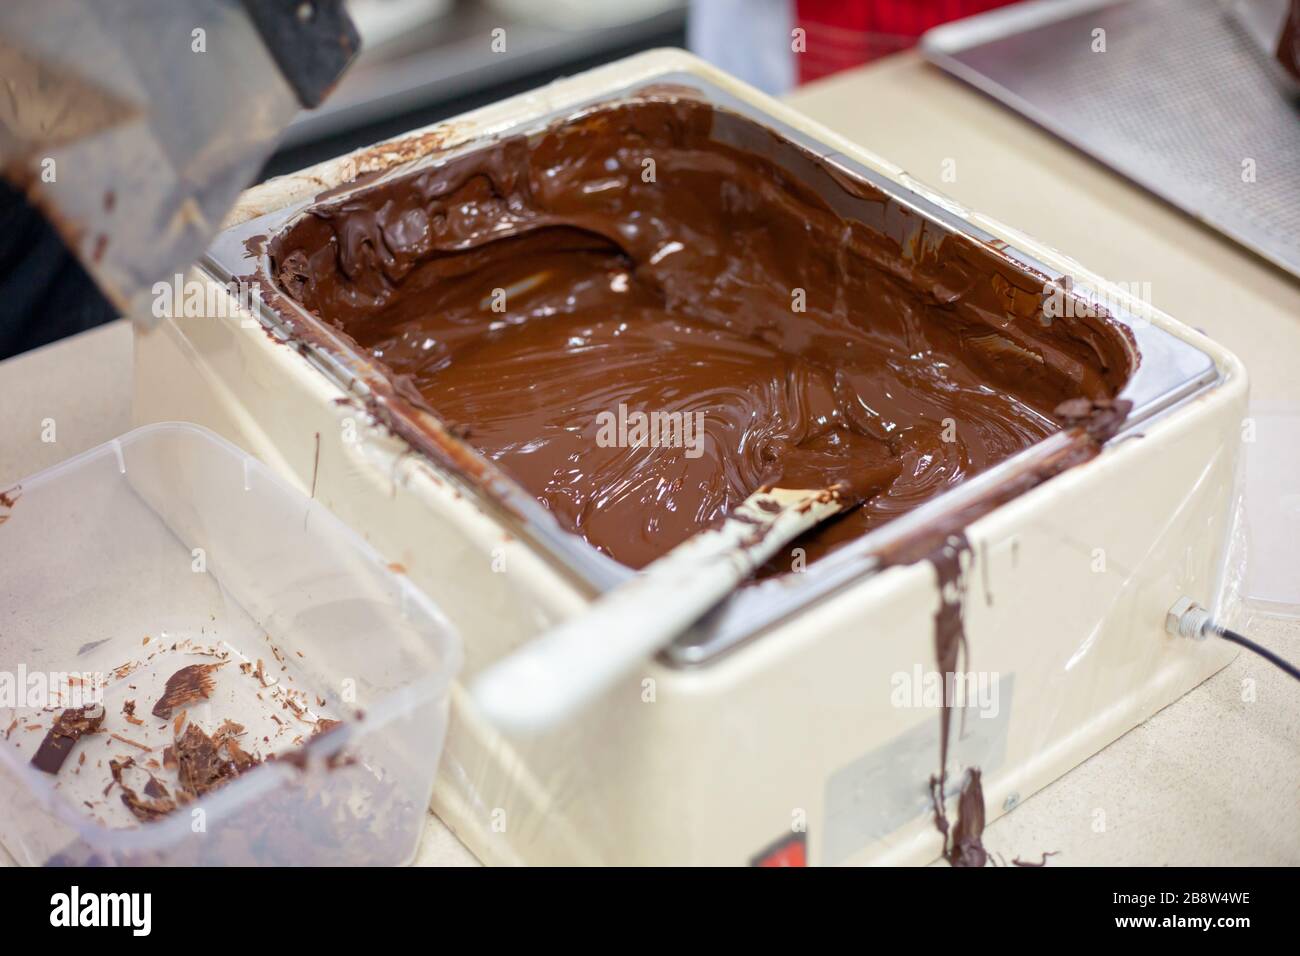 Making chocolate. . Chocolate factory. Liquid chocolate in a pan. Stock Photo